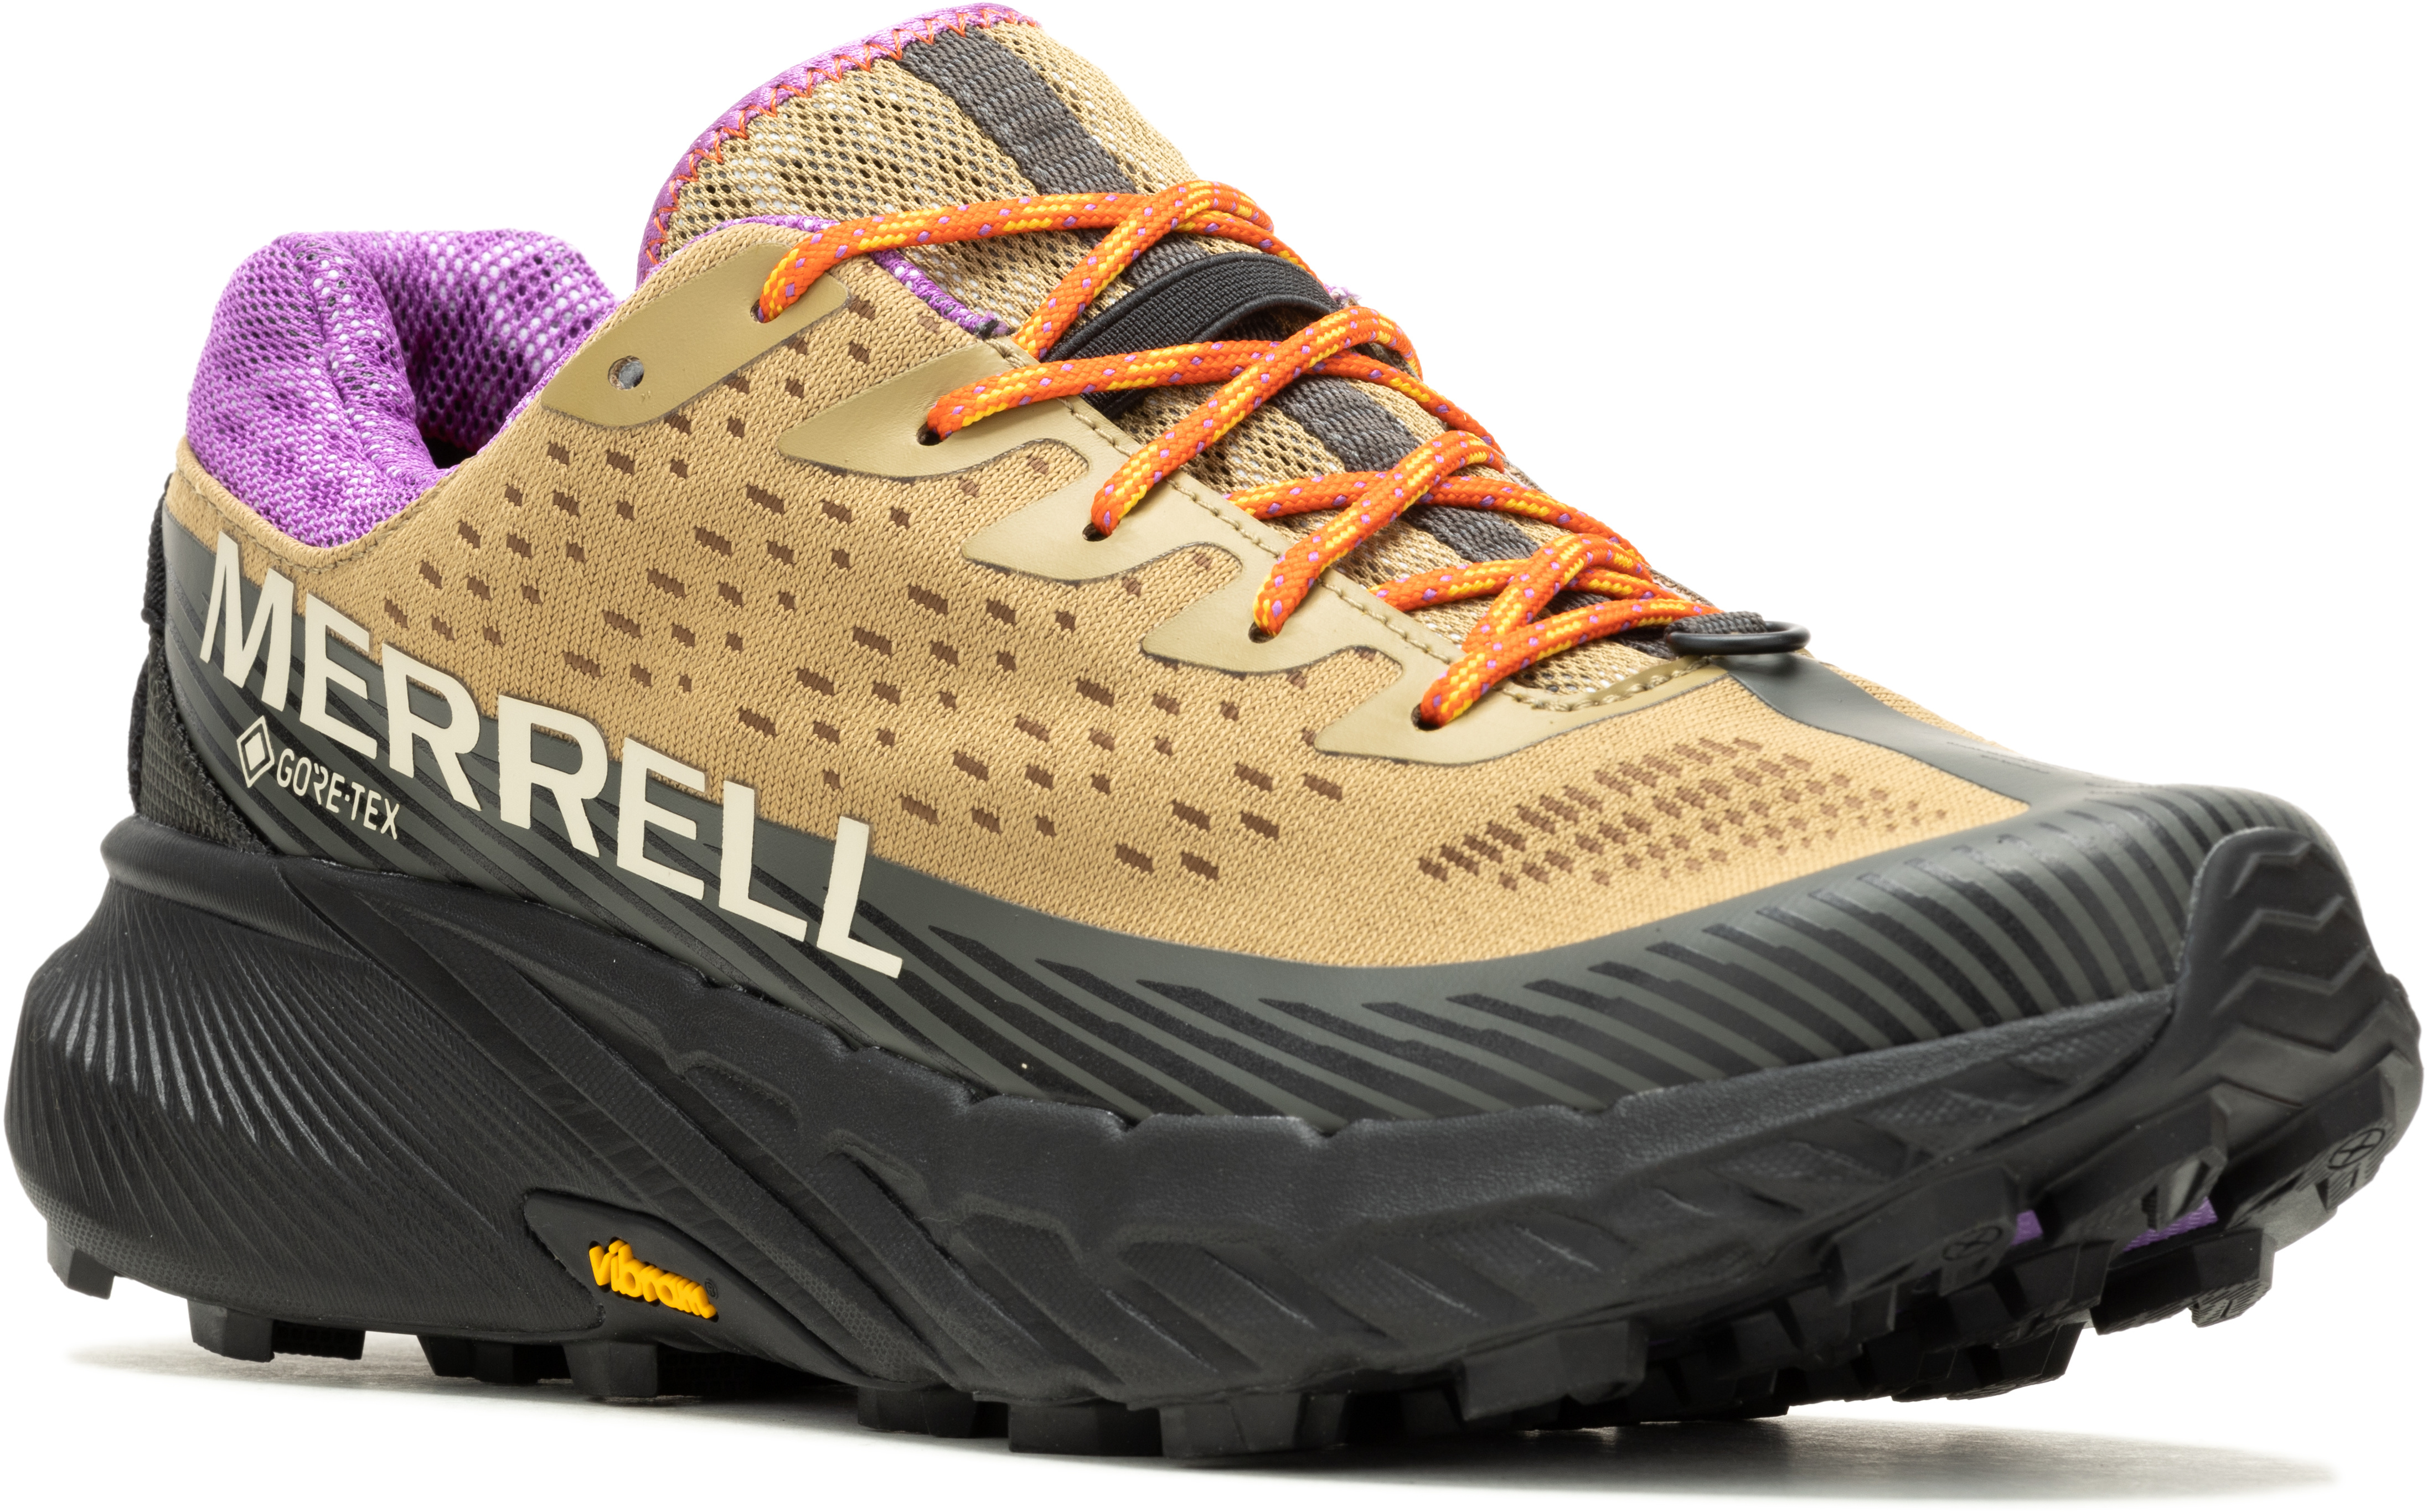 Беговые кроссовки Merrell® Agility Peak 5 GTX® для мужчин Merrell